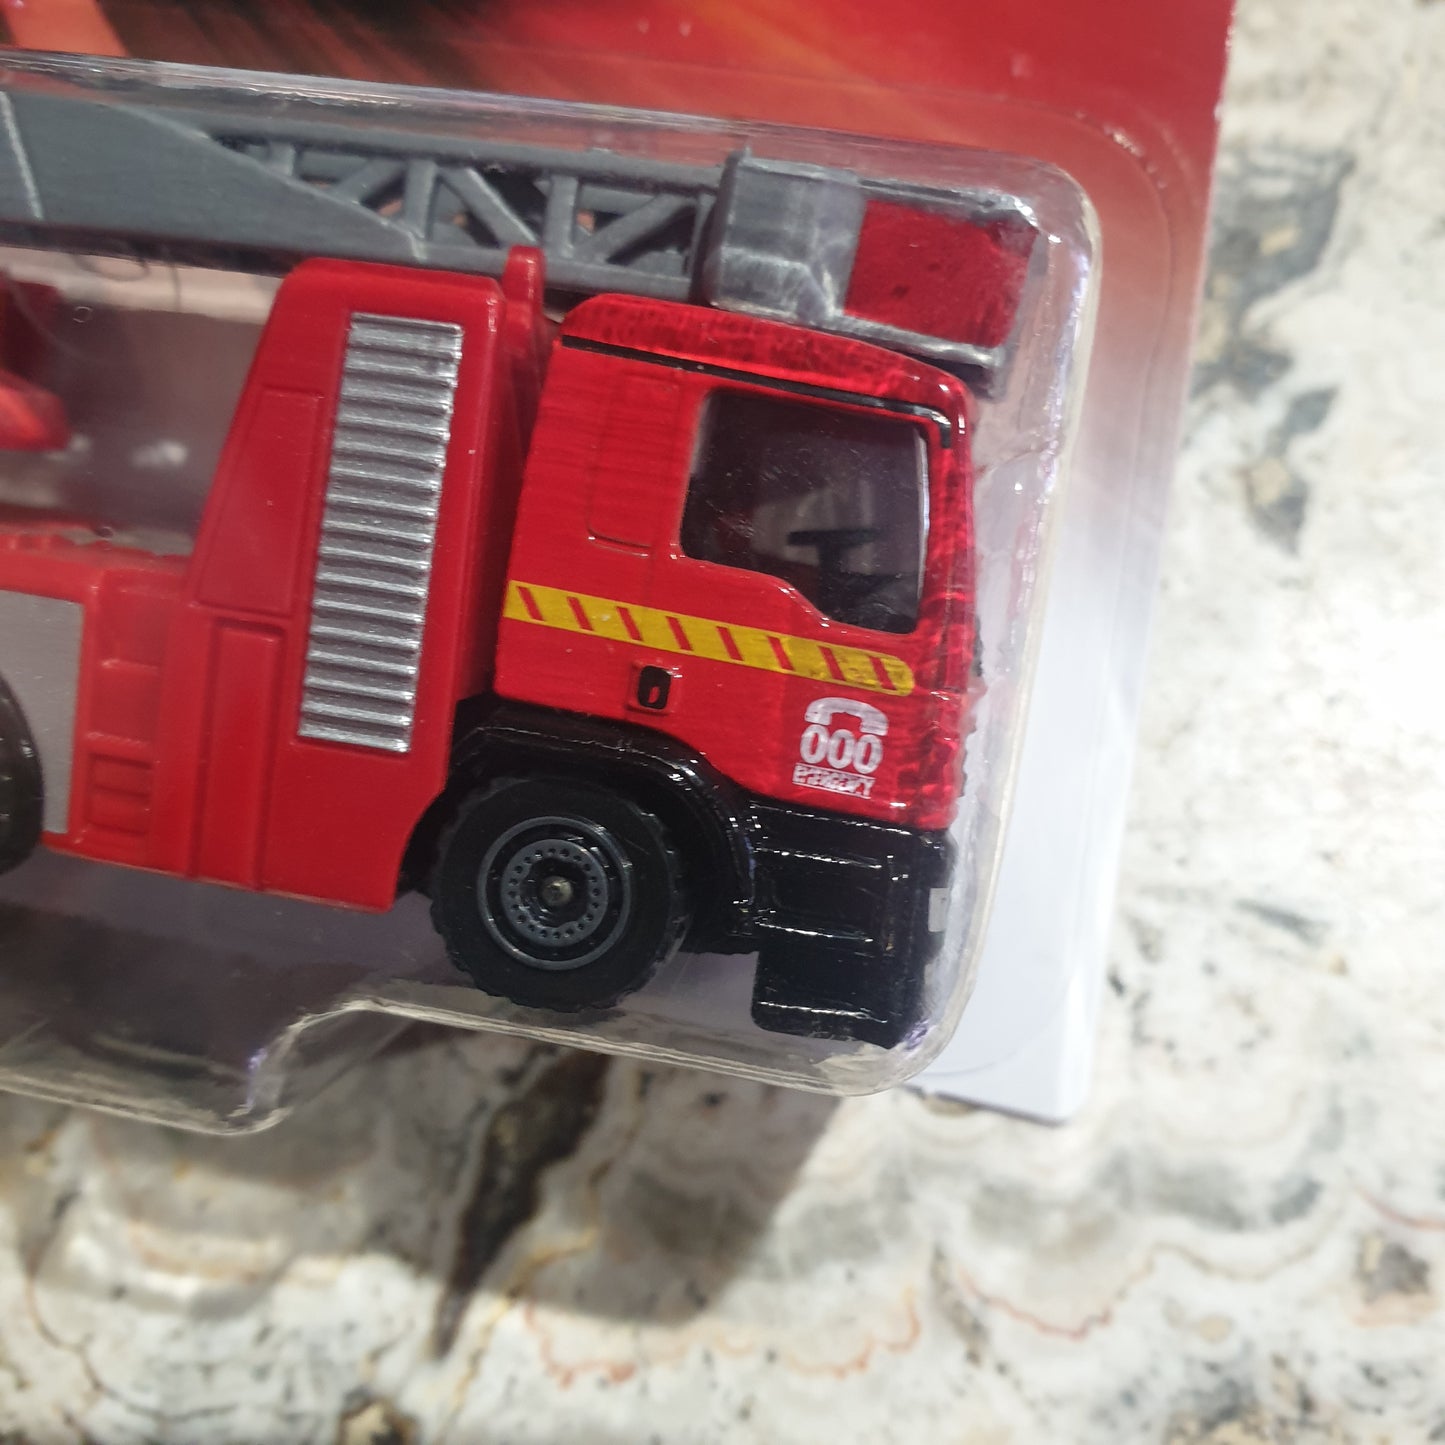 Majorette - SOS Cars - Fire Brigade (000) Truck Diecast Car